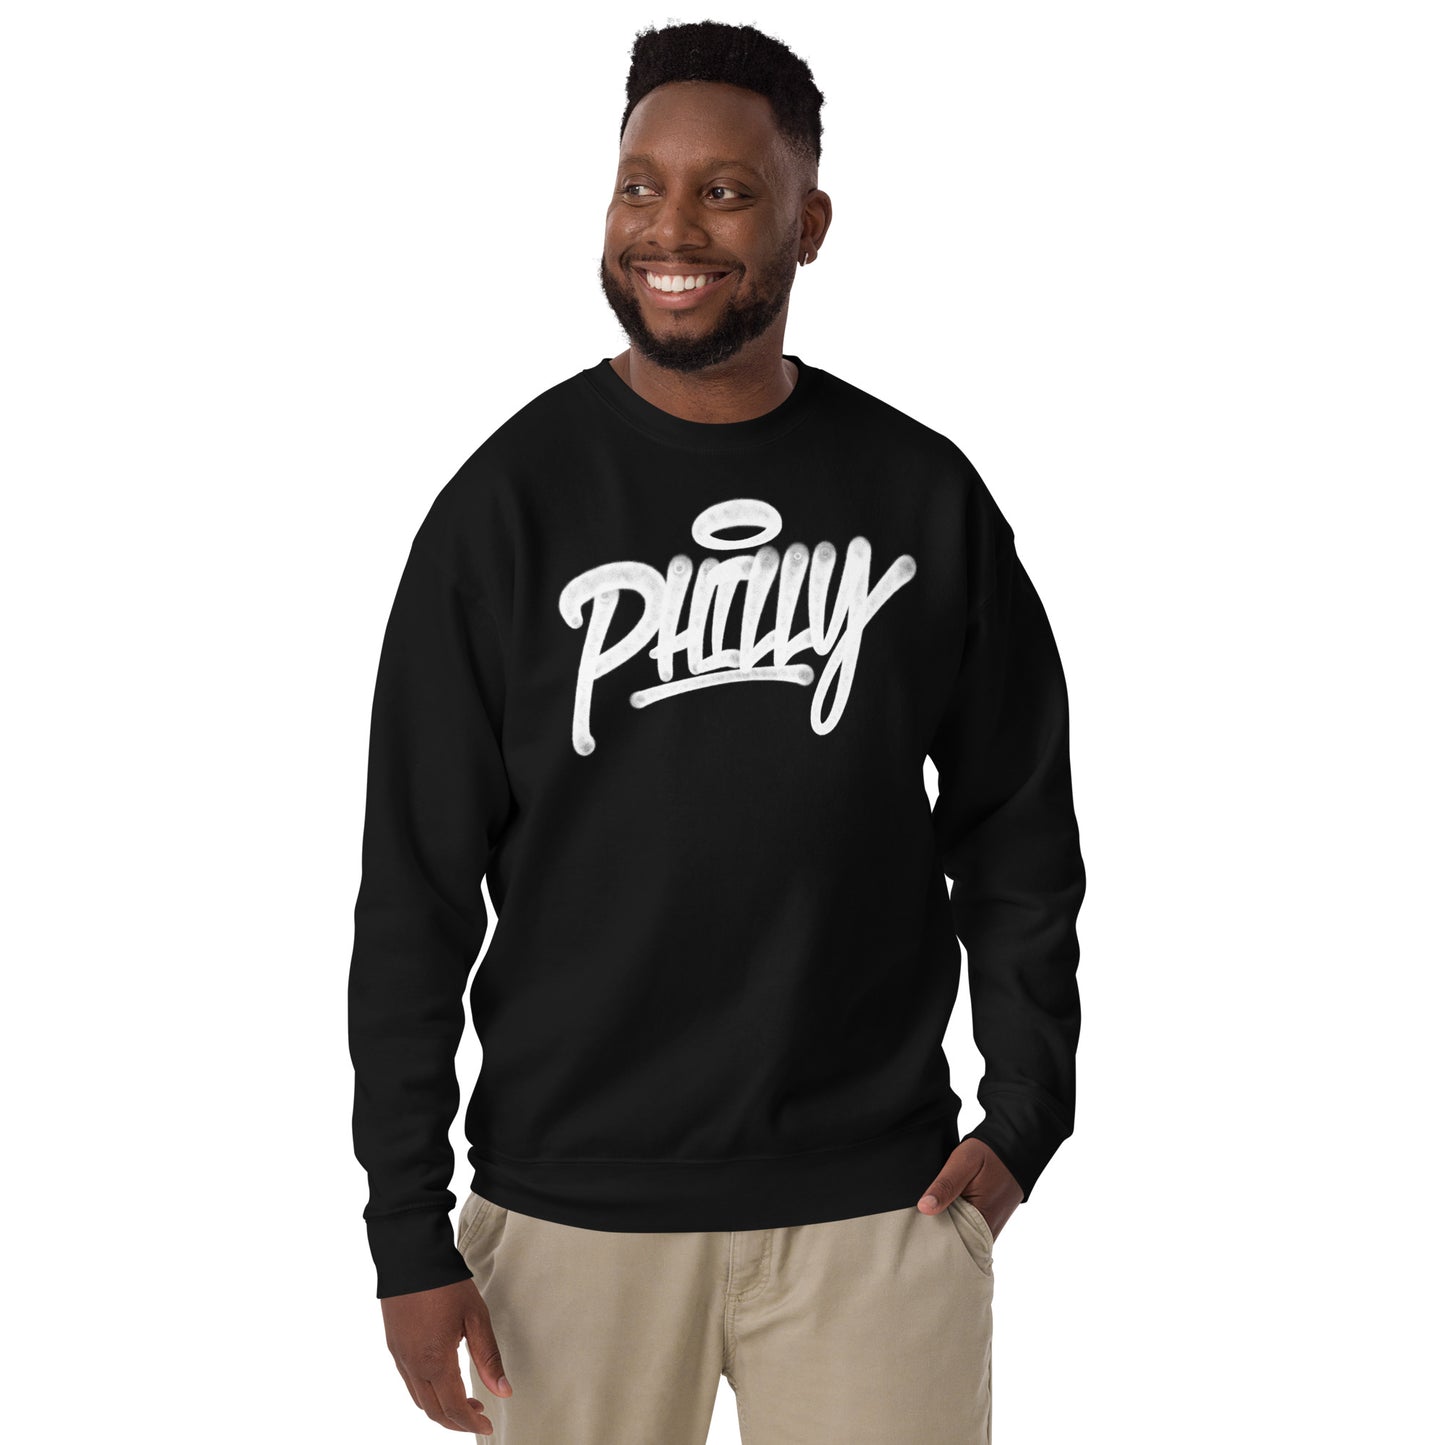 Philly Handstyle Sweatshirt